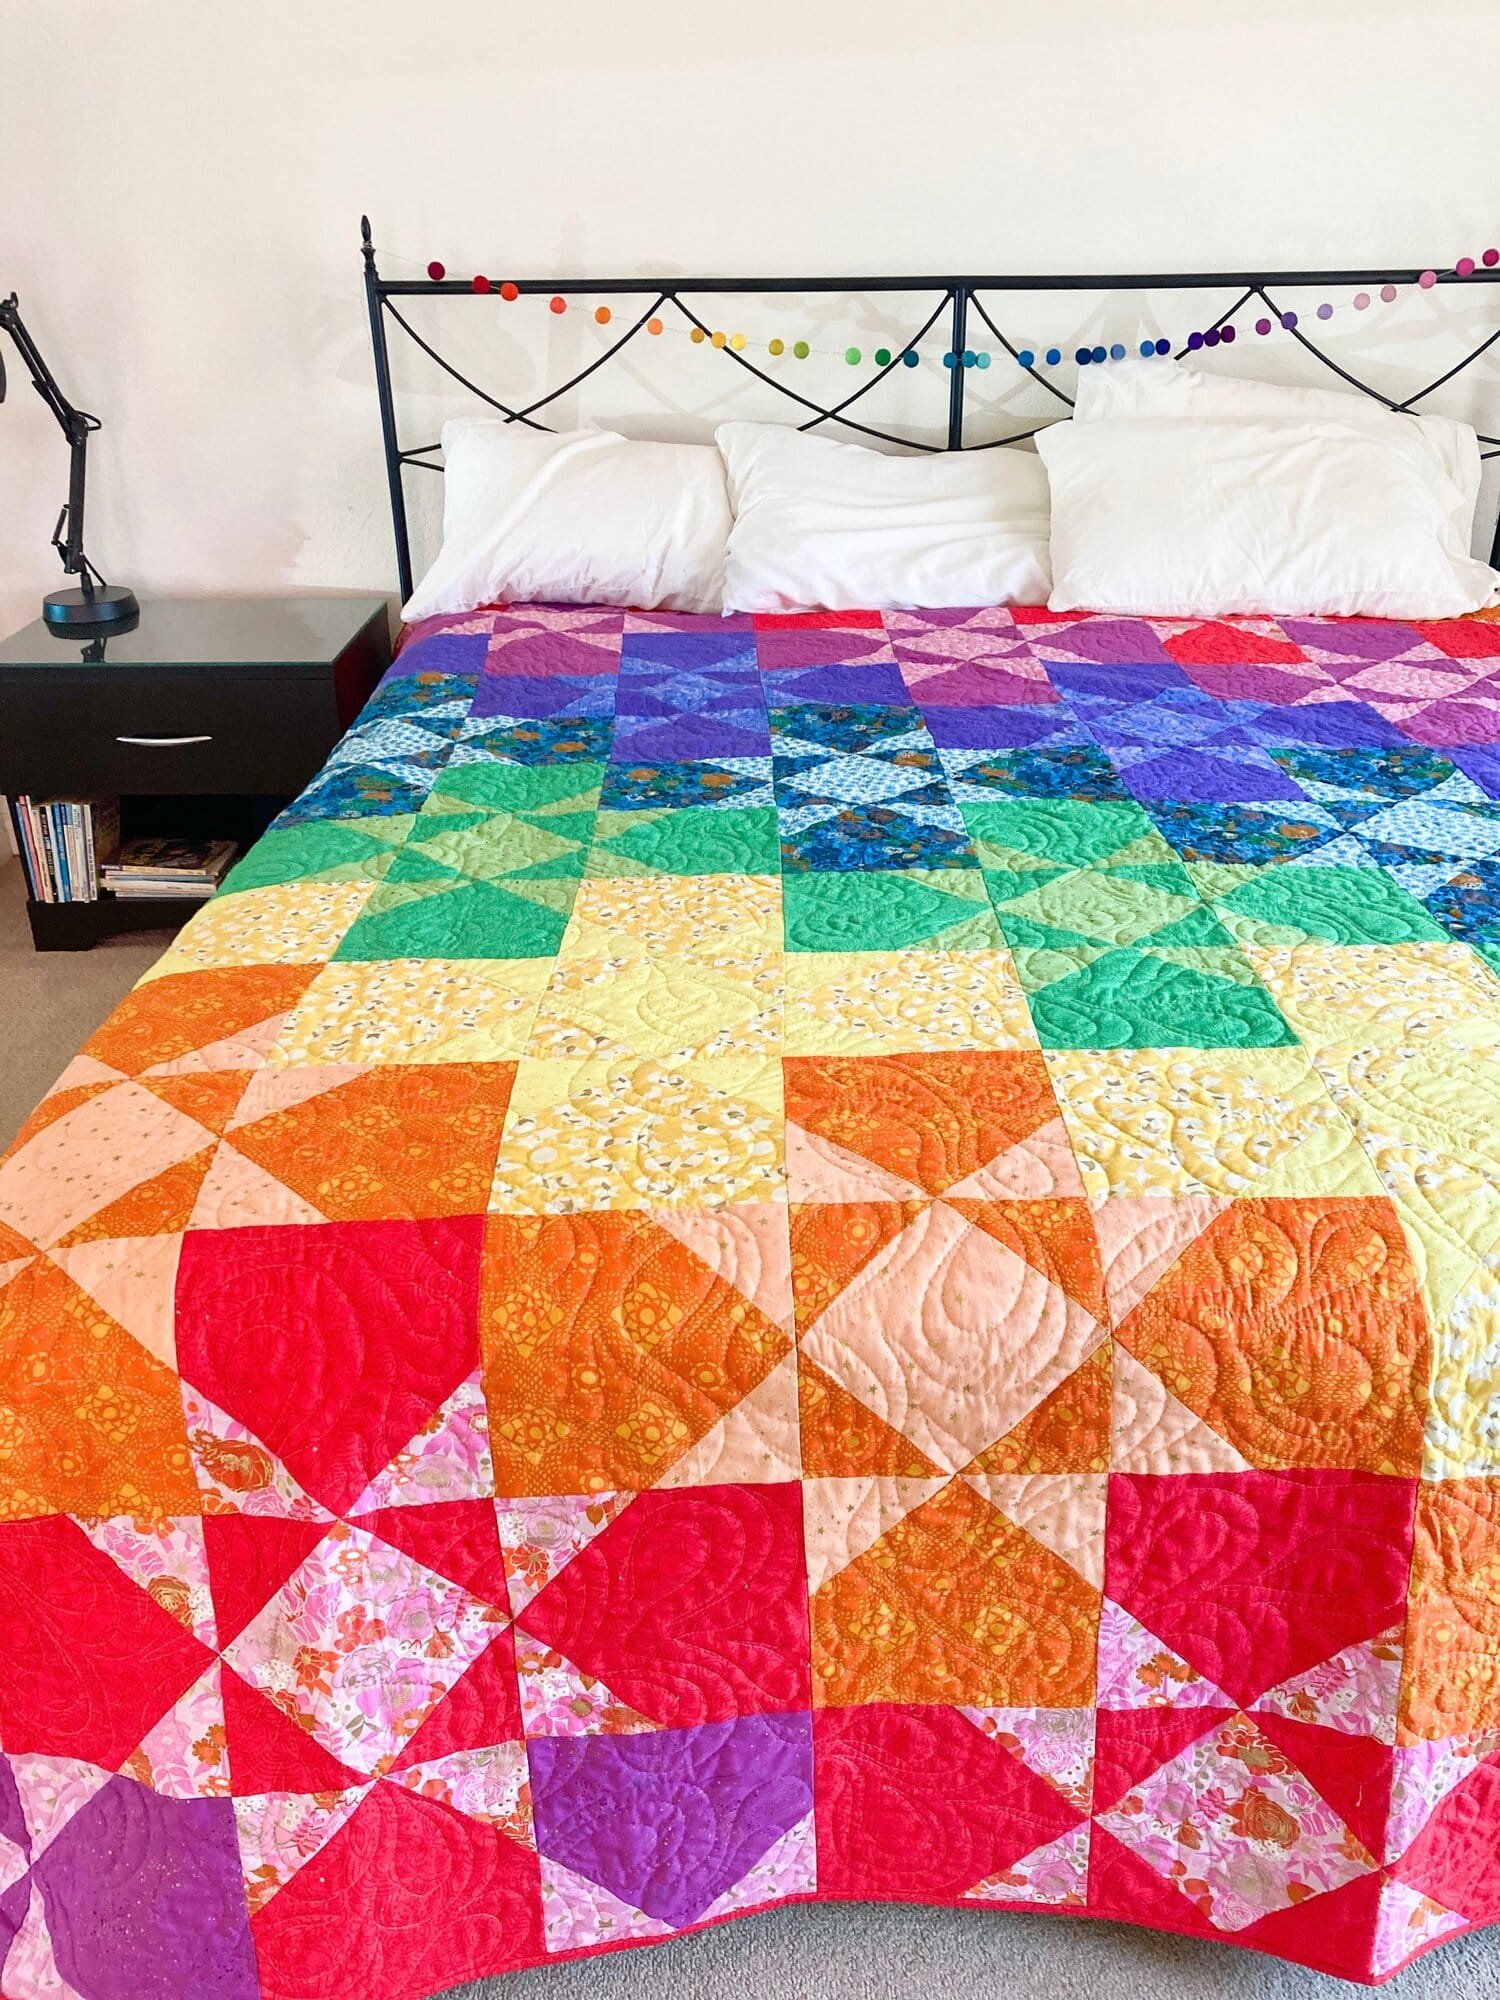 13-la-bizarra-custom-rainbow-quilt-handmade-patchwork-raleigh-north-carolina.jpeg